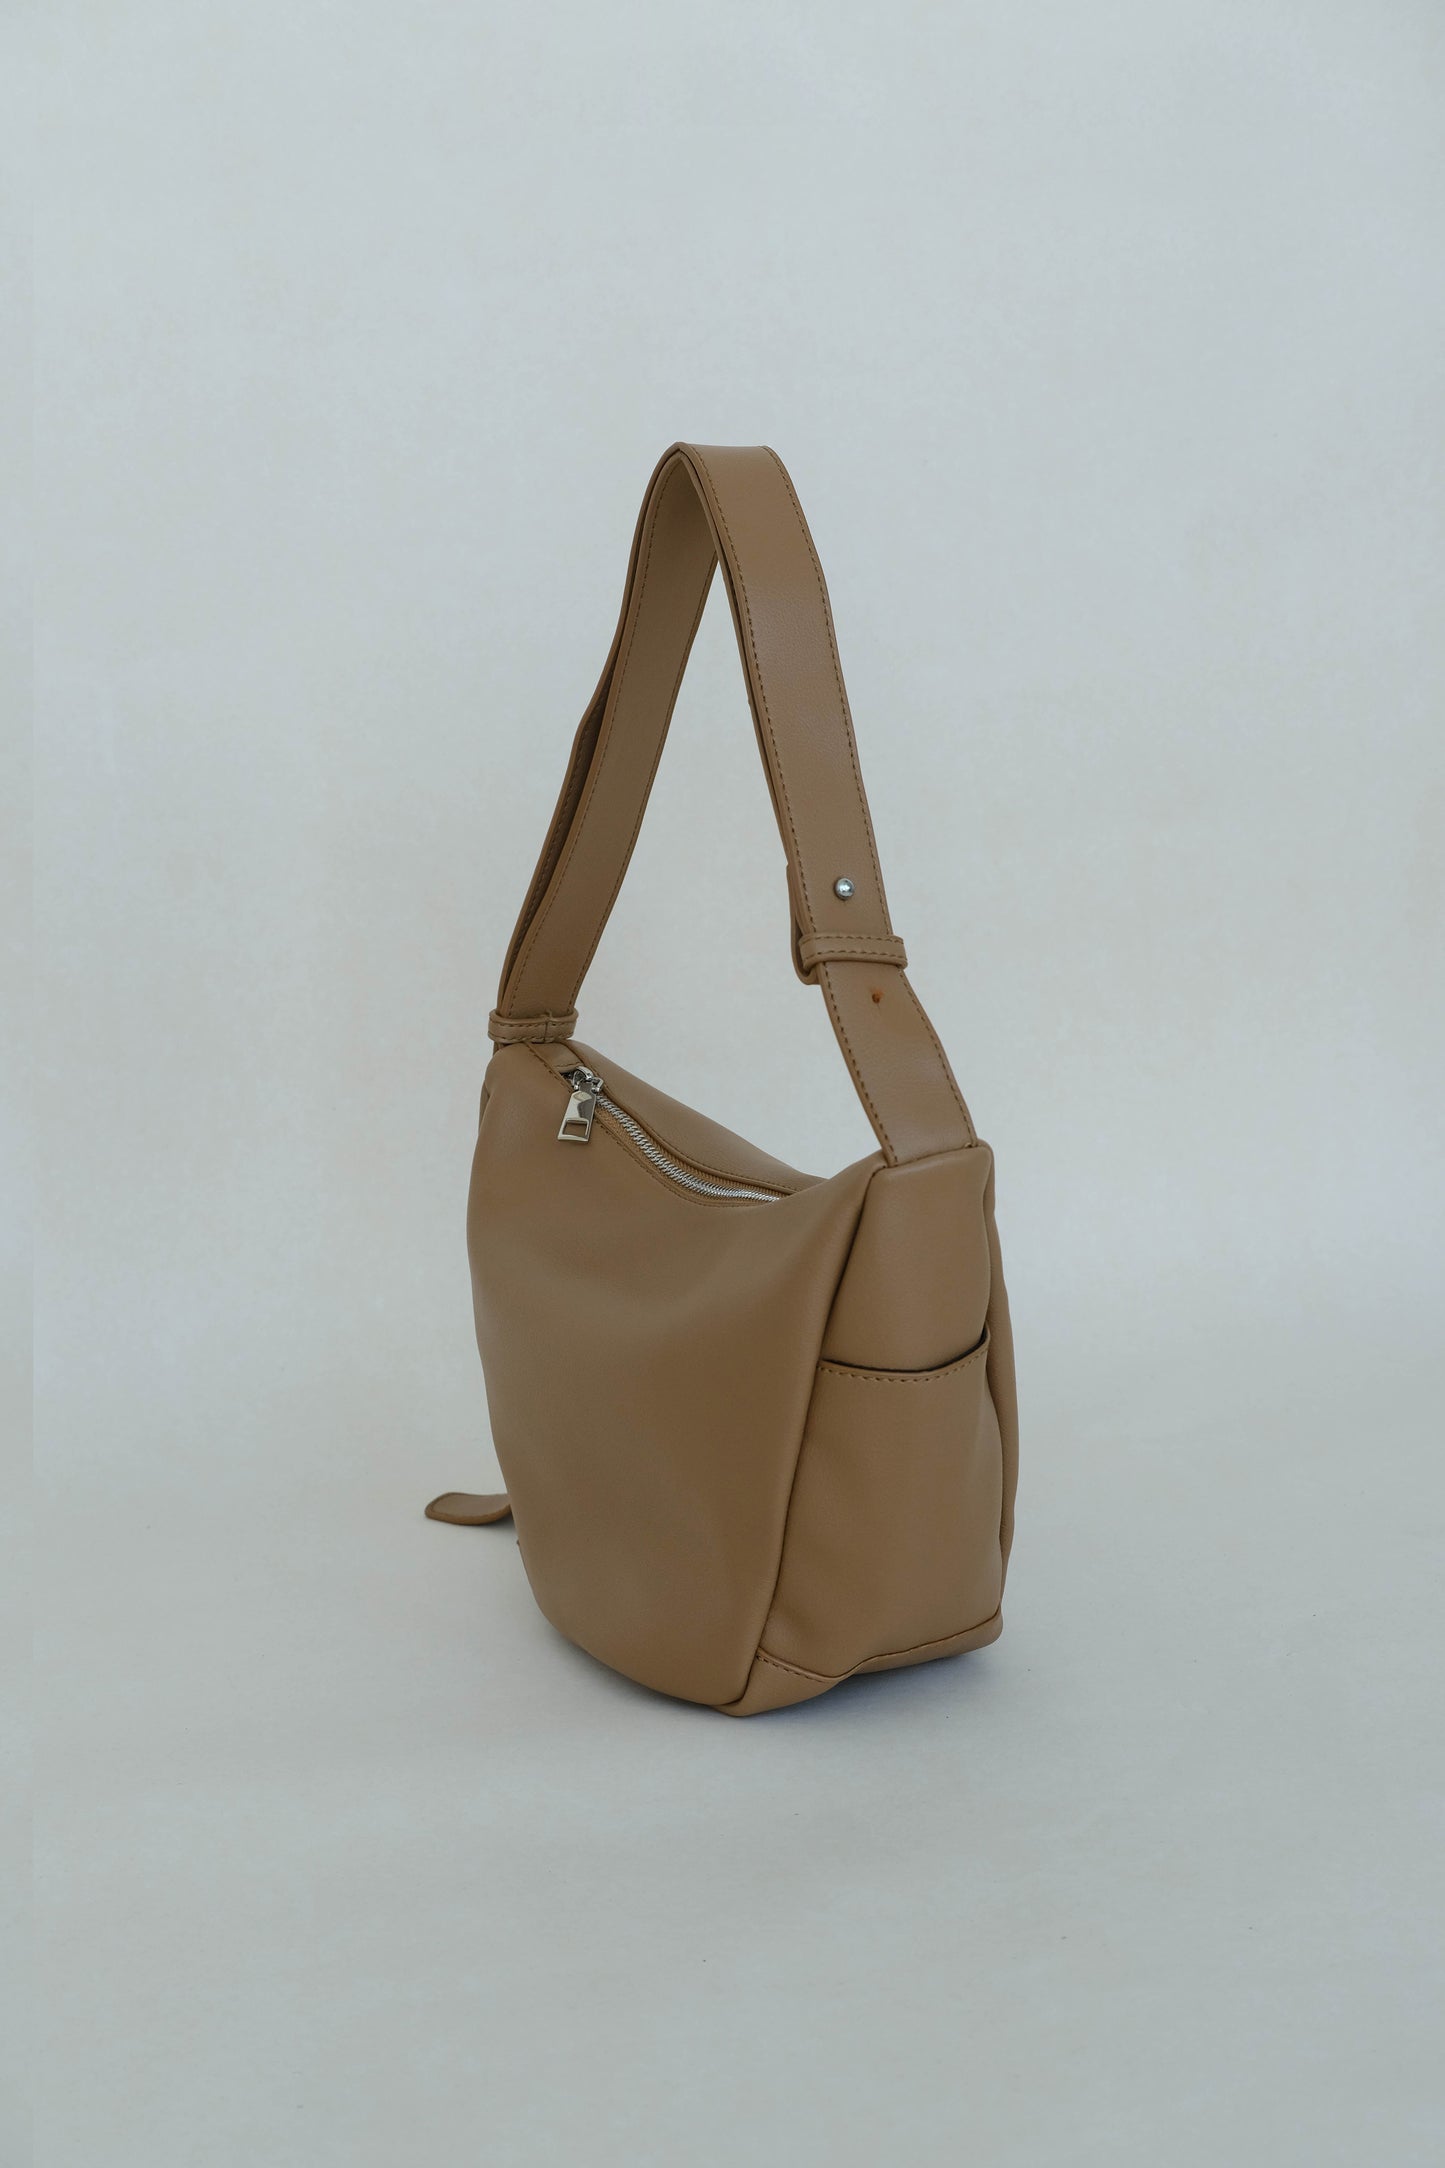 Supple leather axilla single-strap bag in brown color